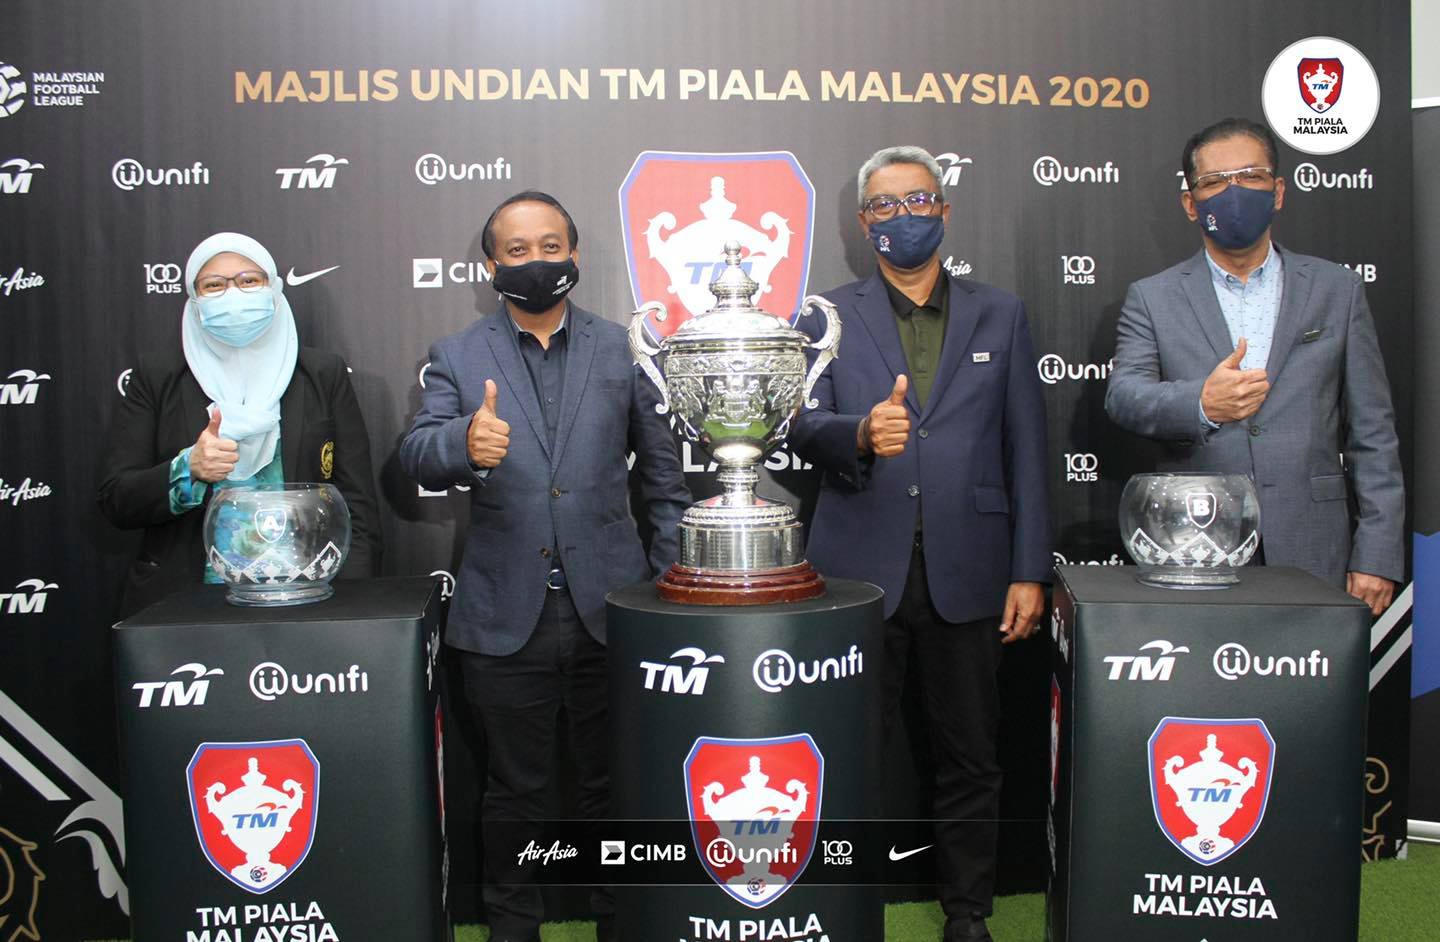 Undian-Piala-Malaysia-2020